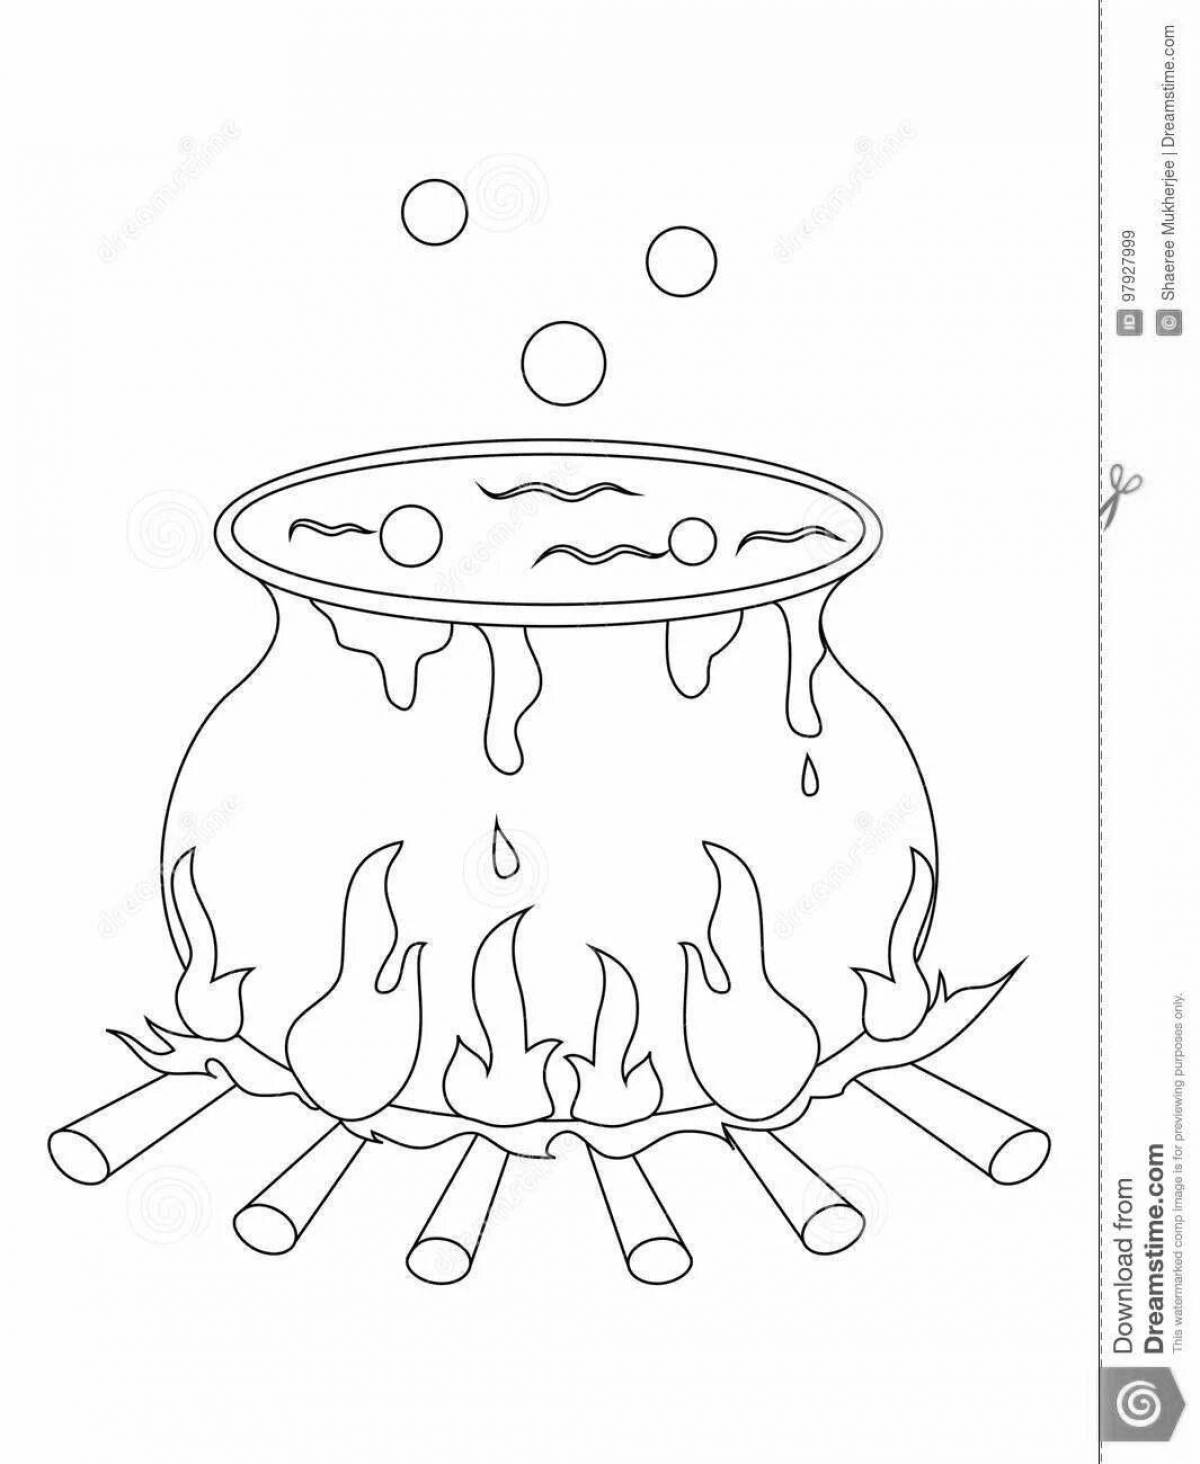 Friendly cauldron coloring page